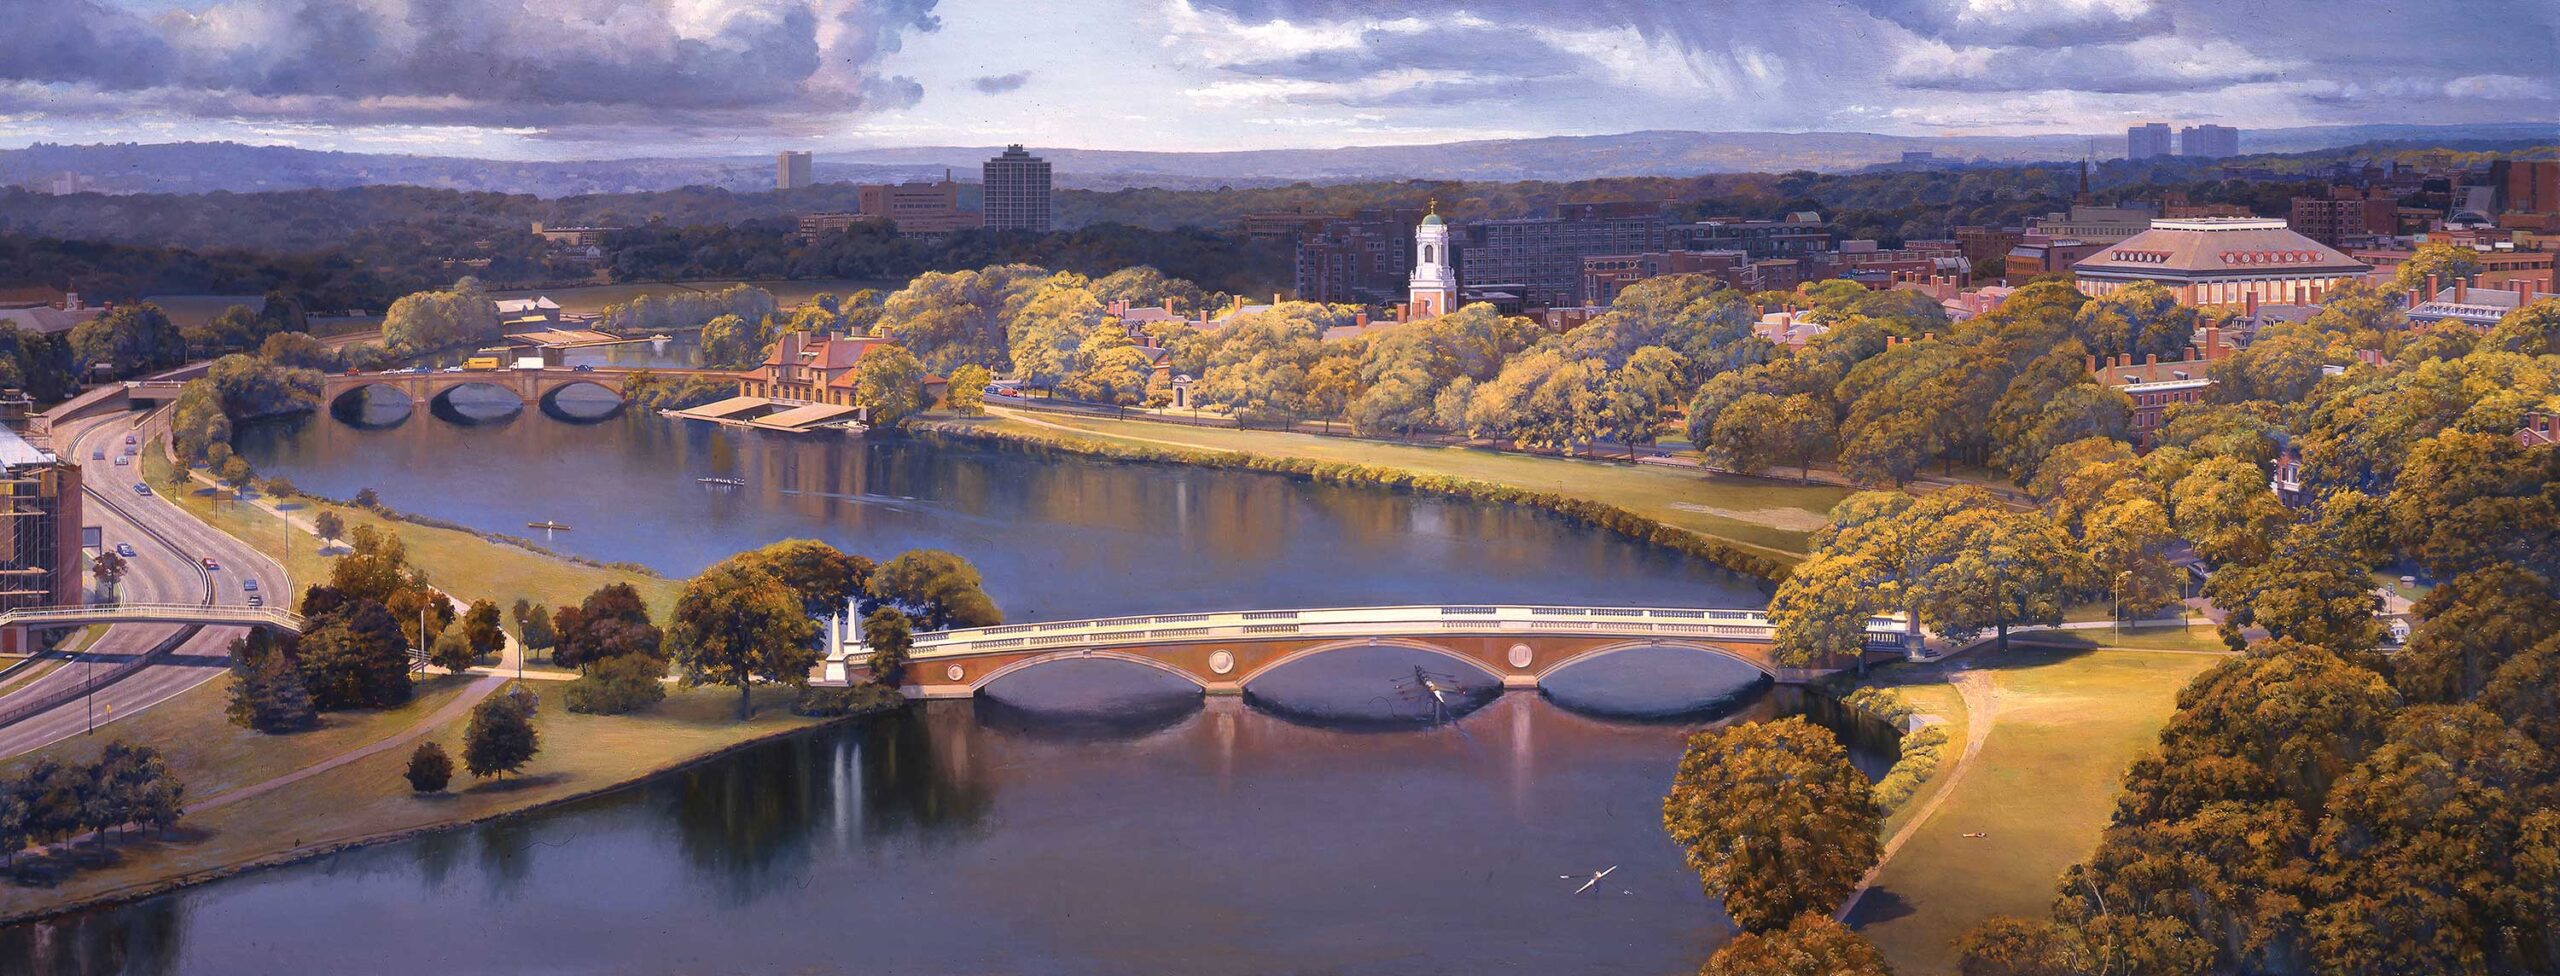 Joel Babb, "The Weeks Bridge, Charles River, Cambridge," 1998, oil on linen, 37 x 97 in., Cambridge Savings Bank, Massachusetts